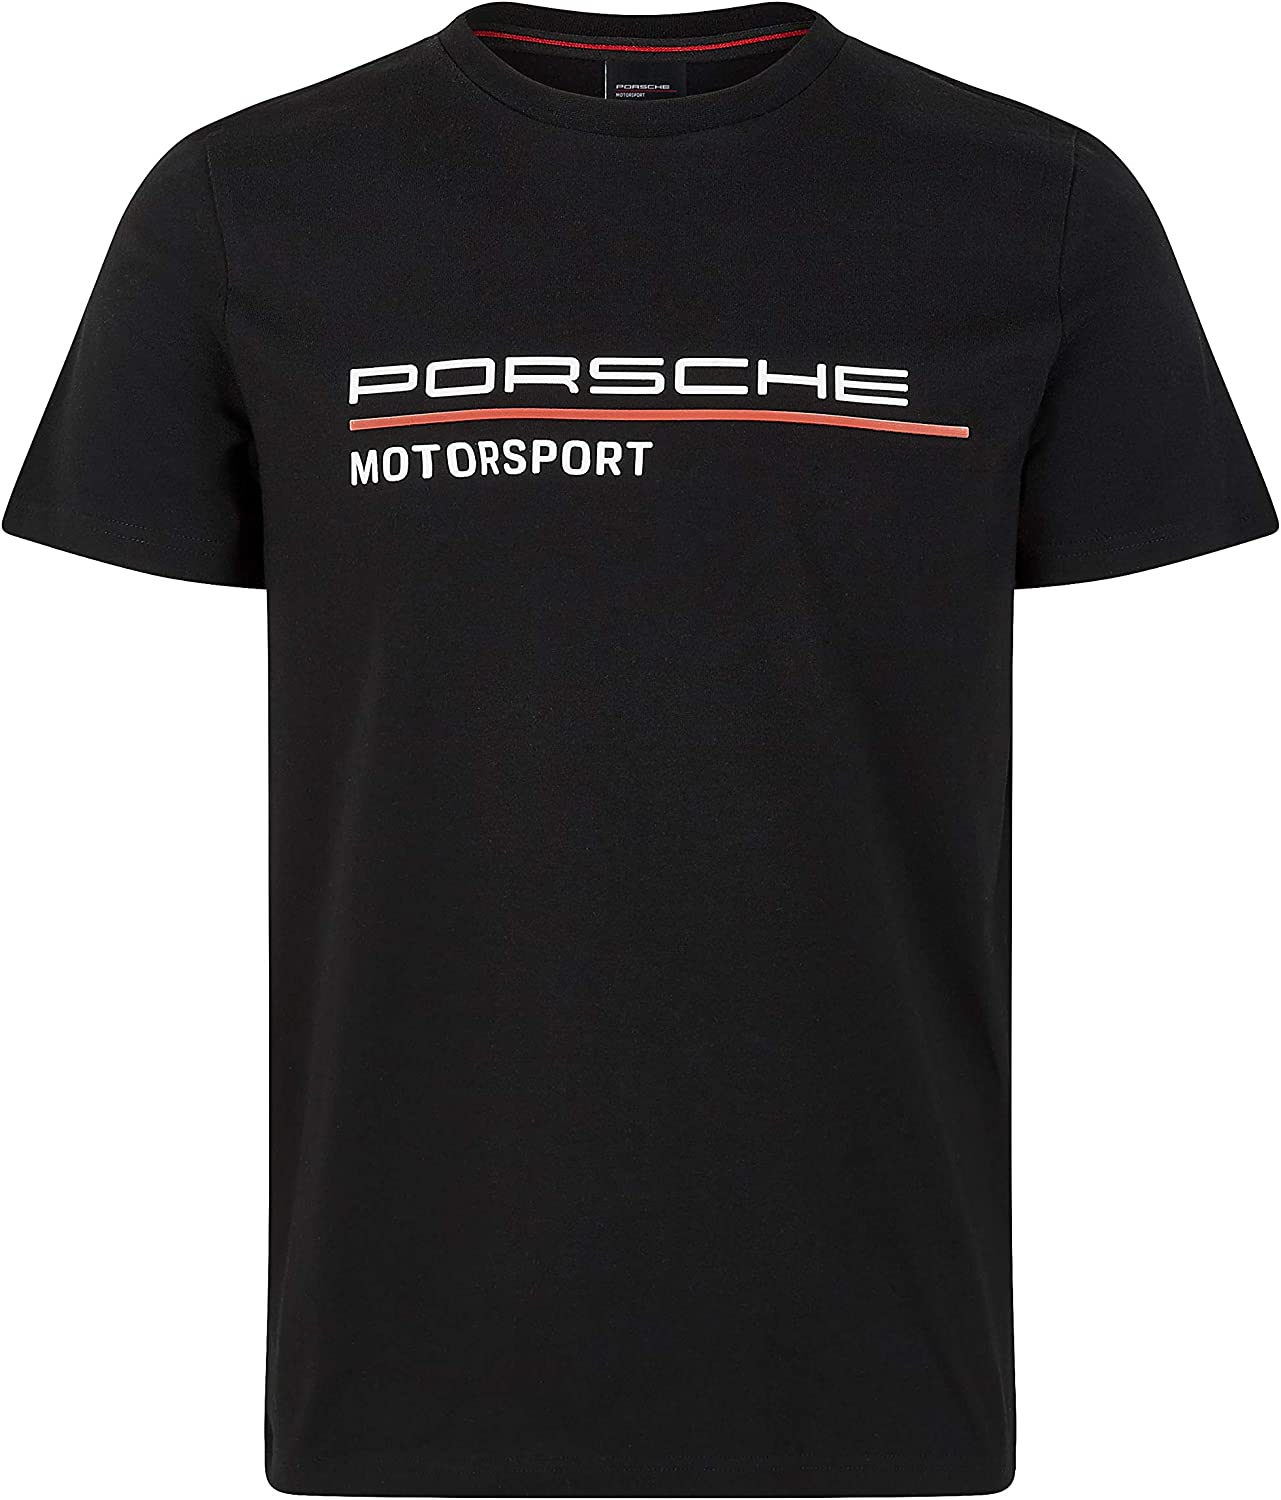 Porsche Motorsport team t-shirt